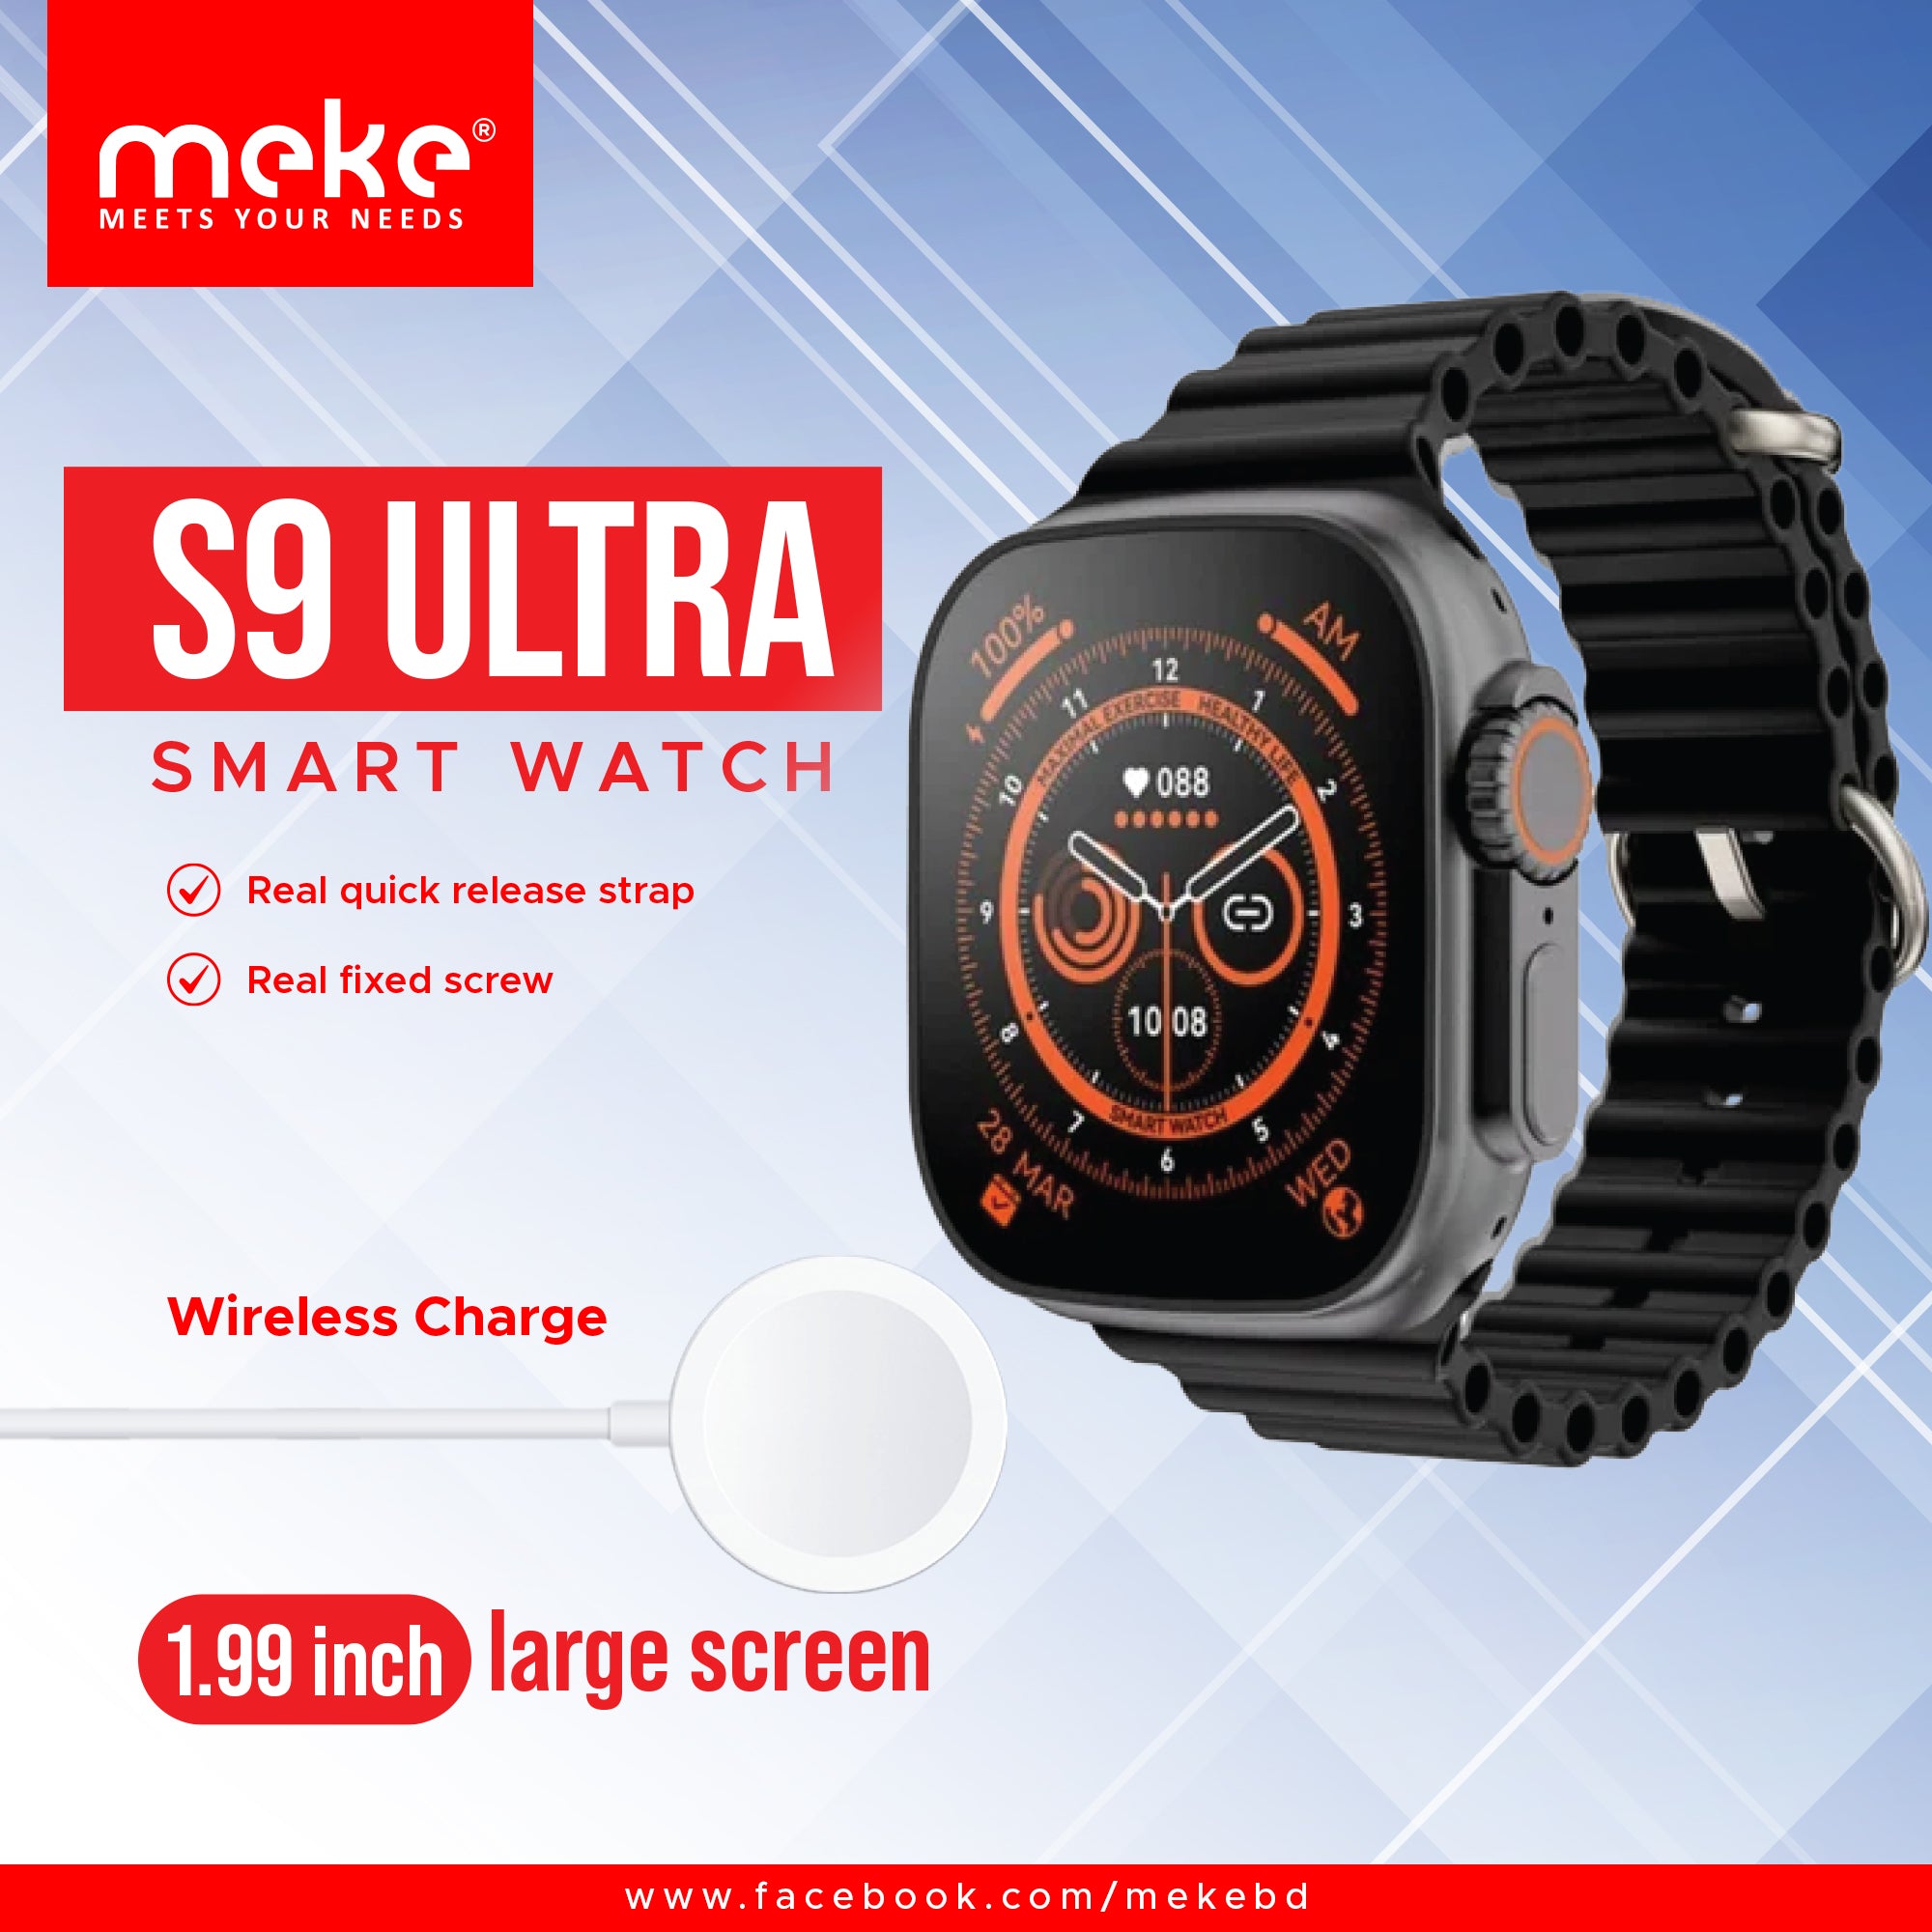 Meke S9Ultra Wireless Charge 1.99 inch Large Screen Smart Watch GT4001